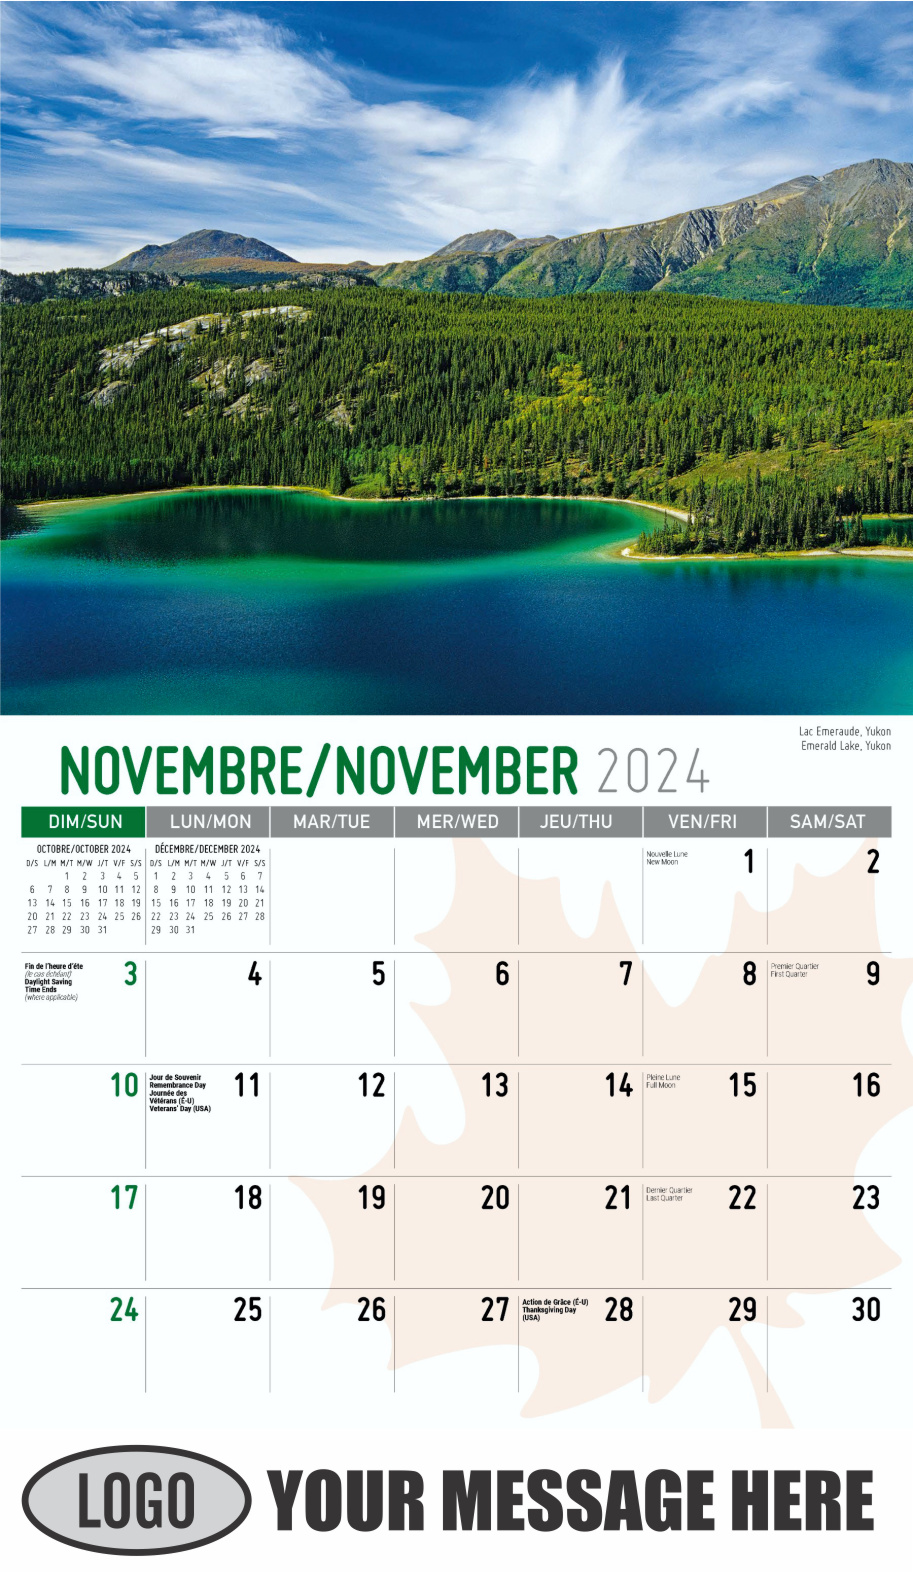 Scenes of Canada 2024 Bilingual Business Advertising Calendar - November